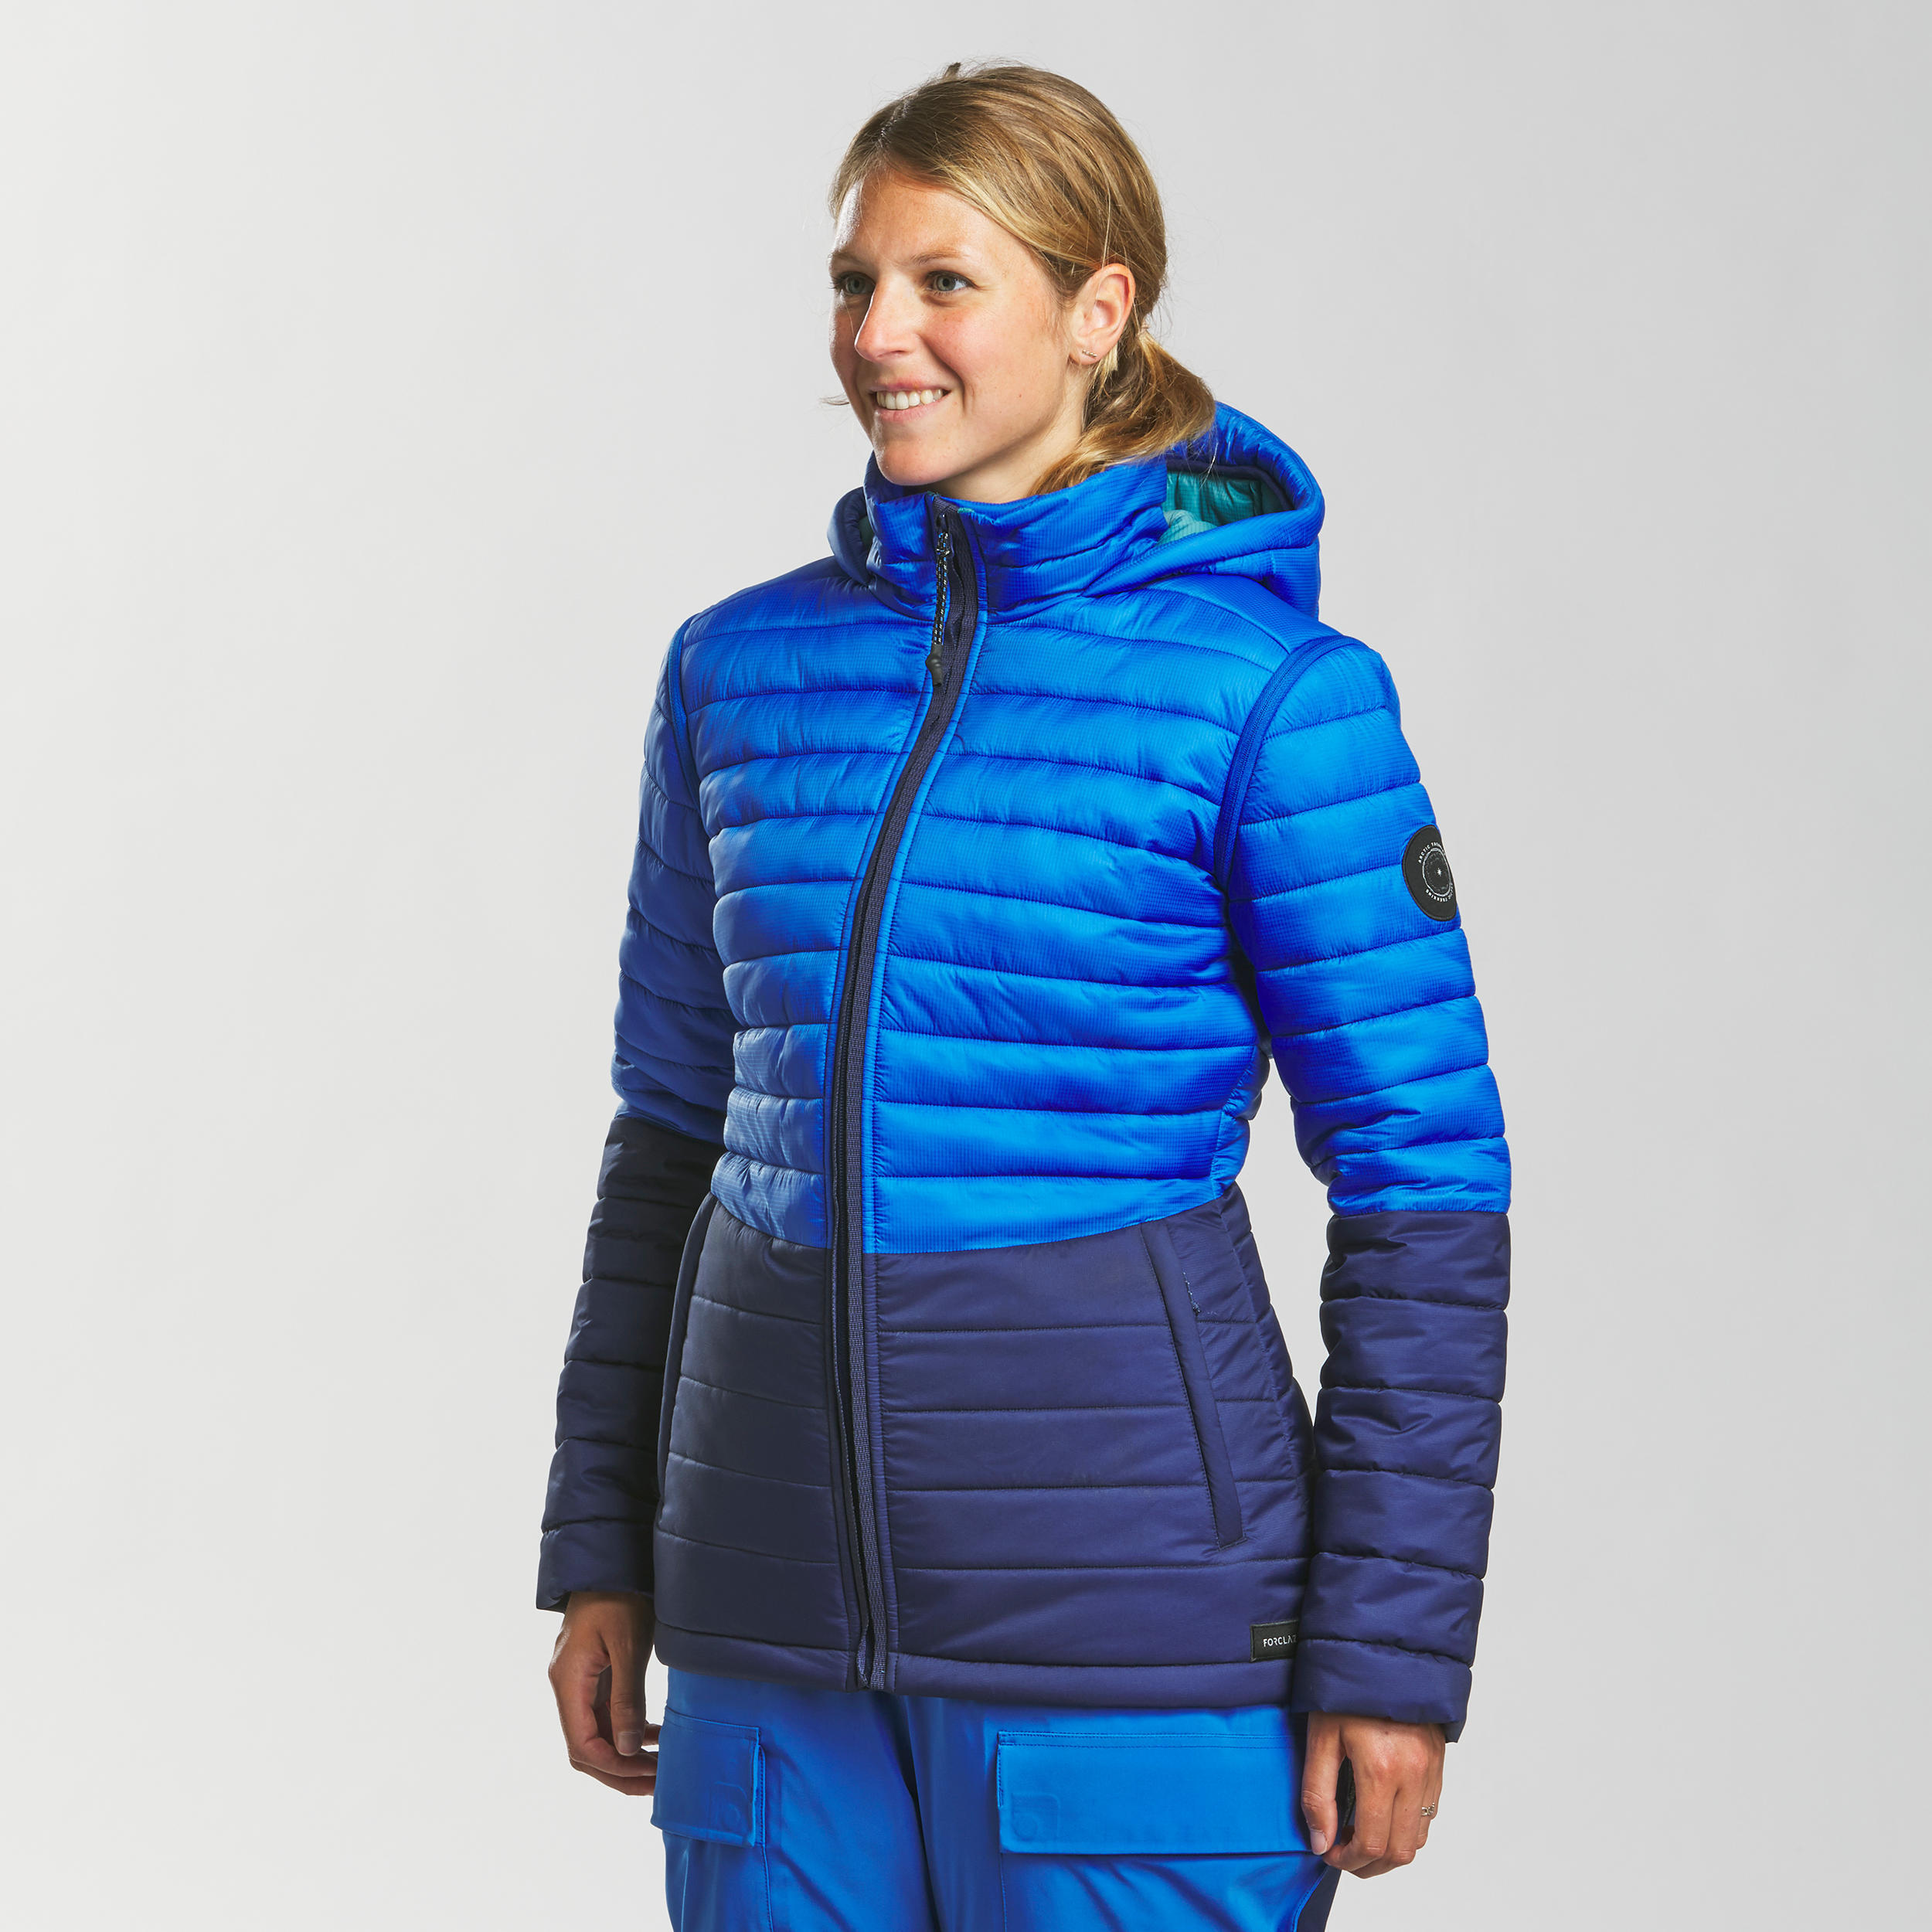 3in1 waterproof parka trekking jacket - Artic 900 -33°C - Women's 16/20